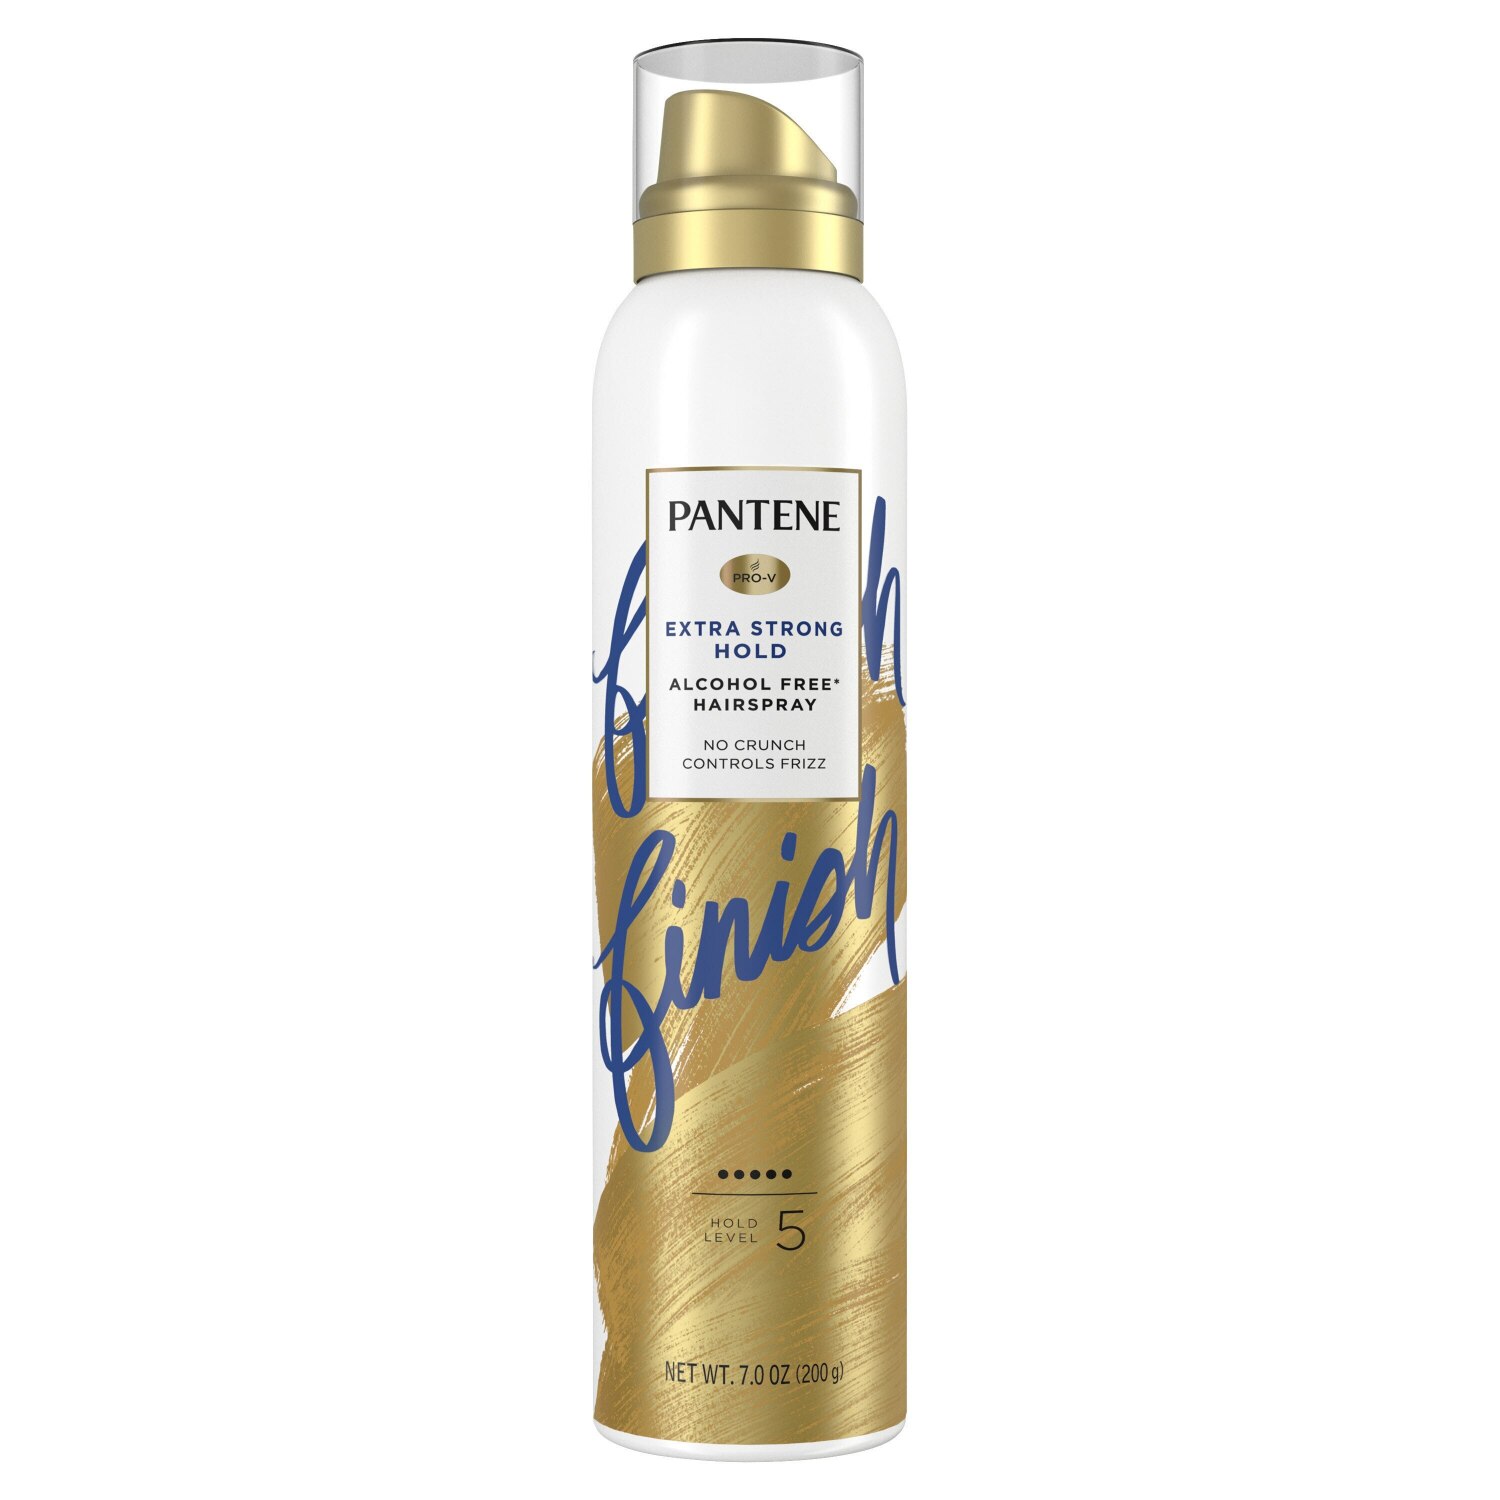 Pantene Pro-V Extra Strong Hold Hair Spray